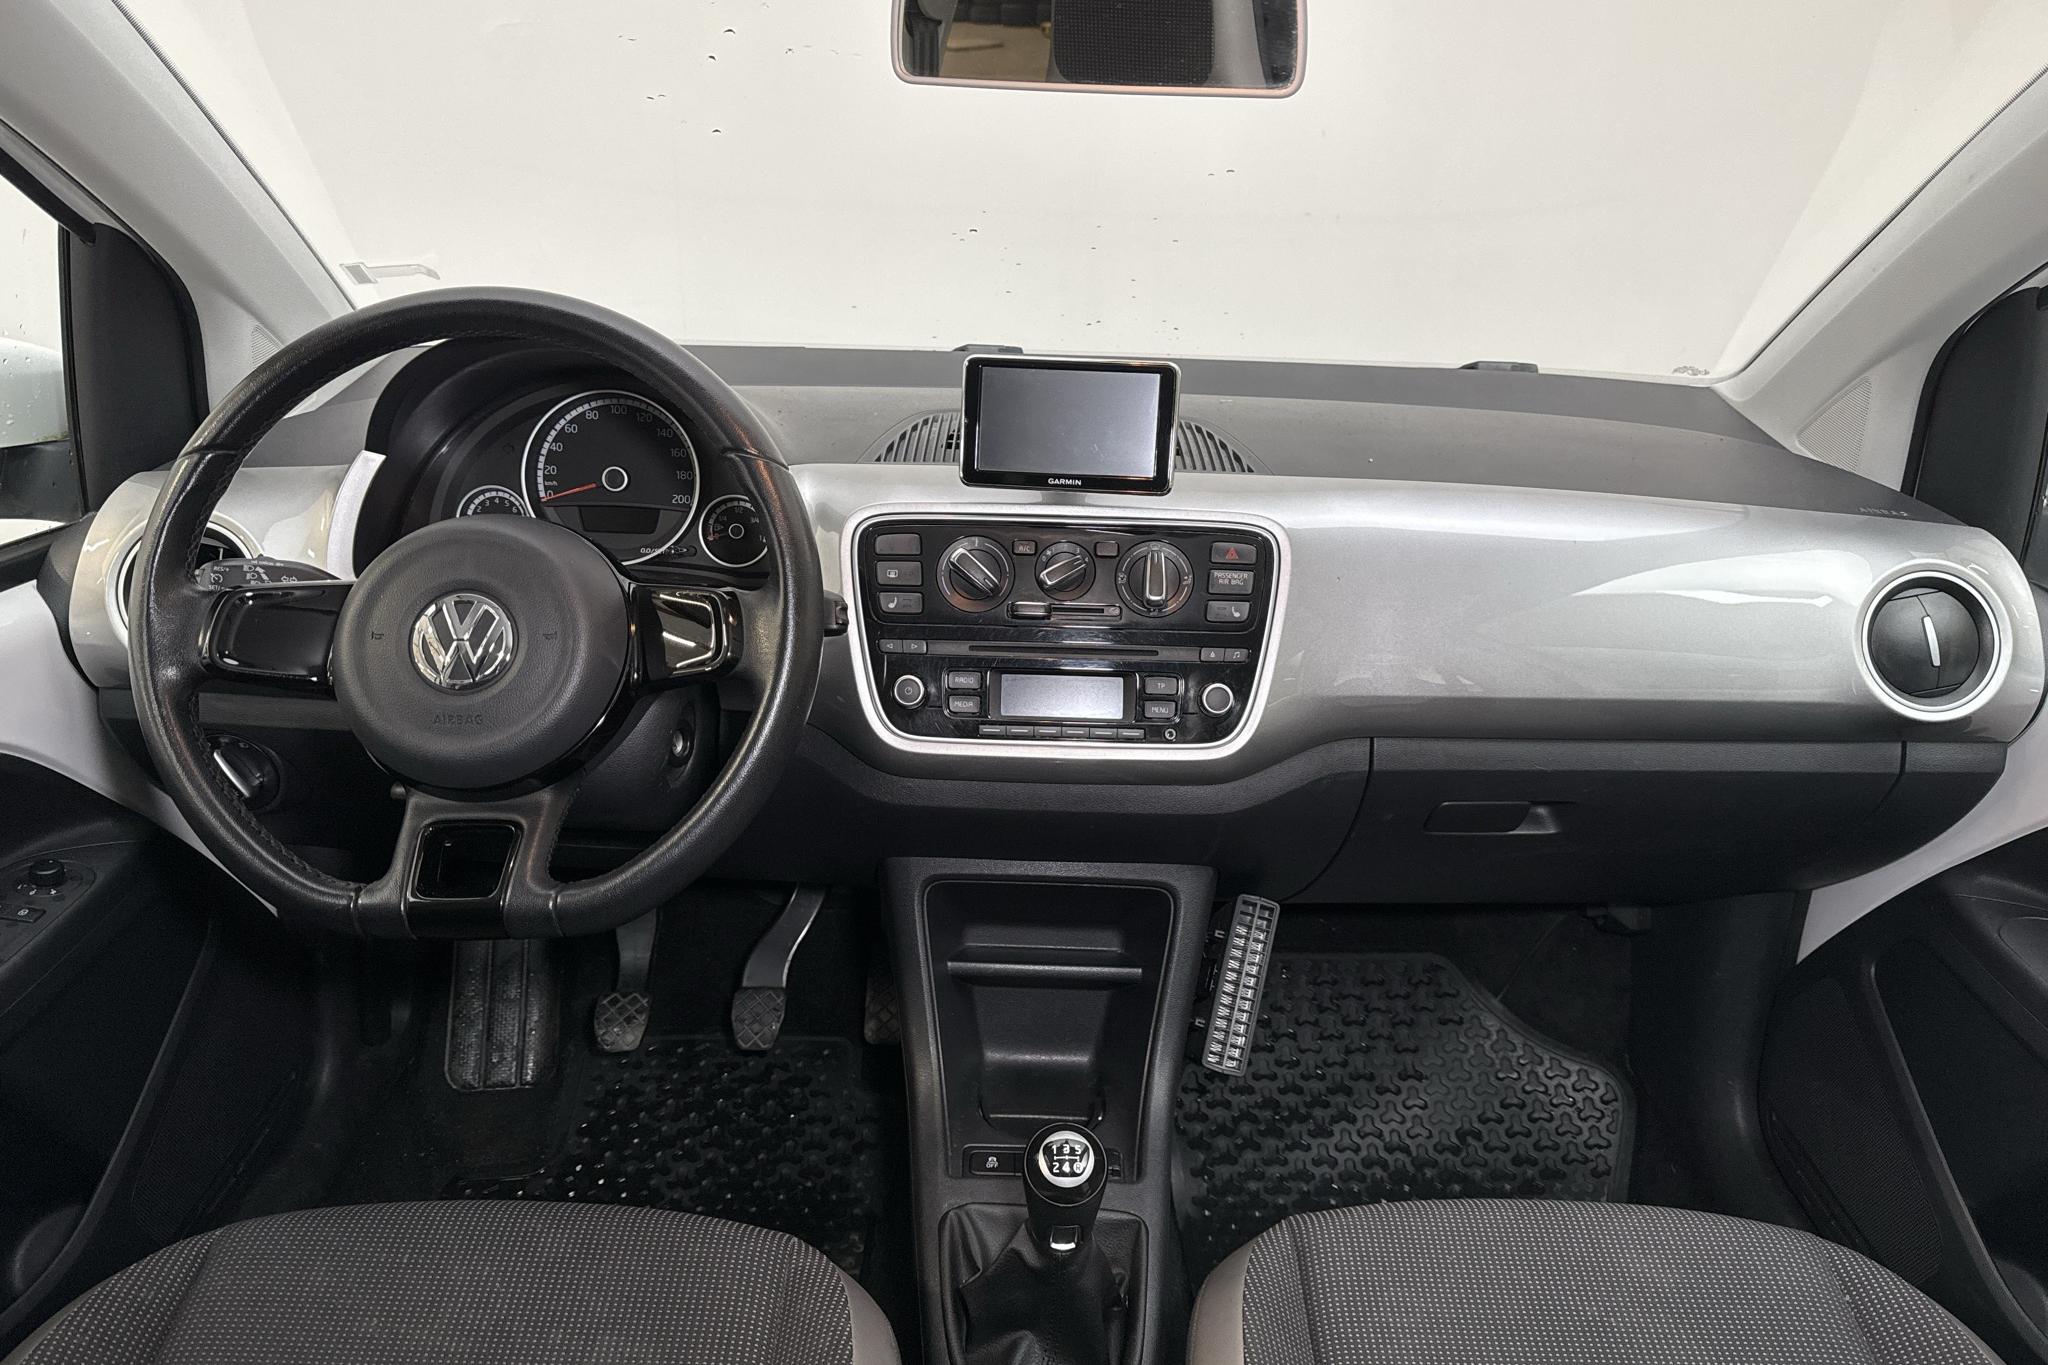 VW up! 1.0 5dr (75hk) - 101 680 km - Manual - white - 2014